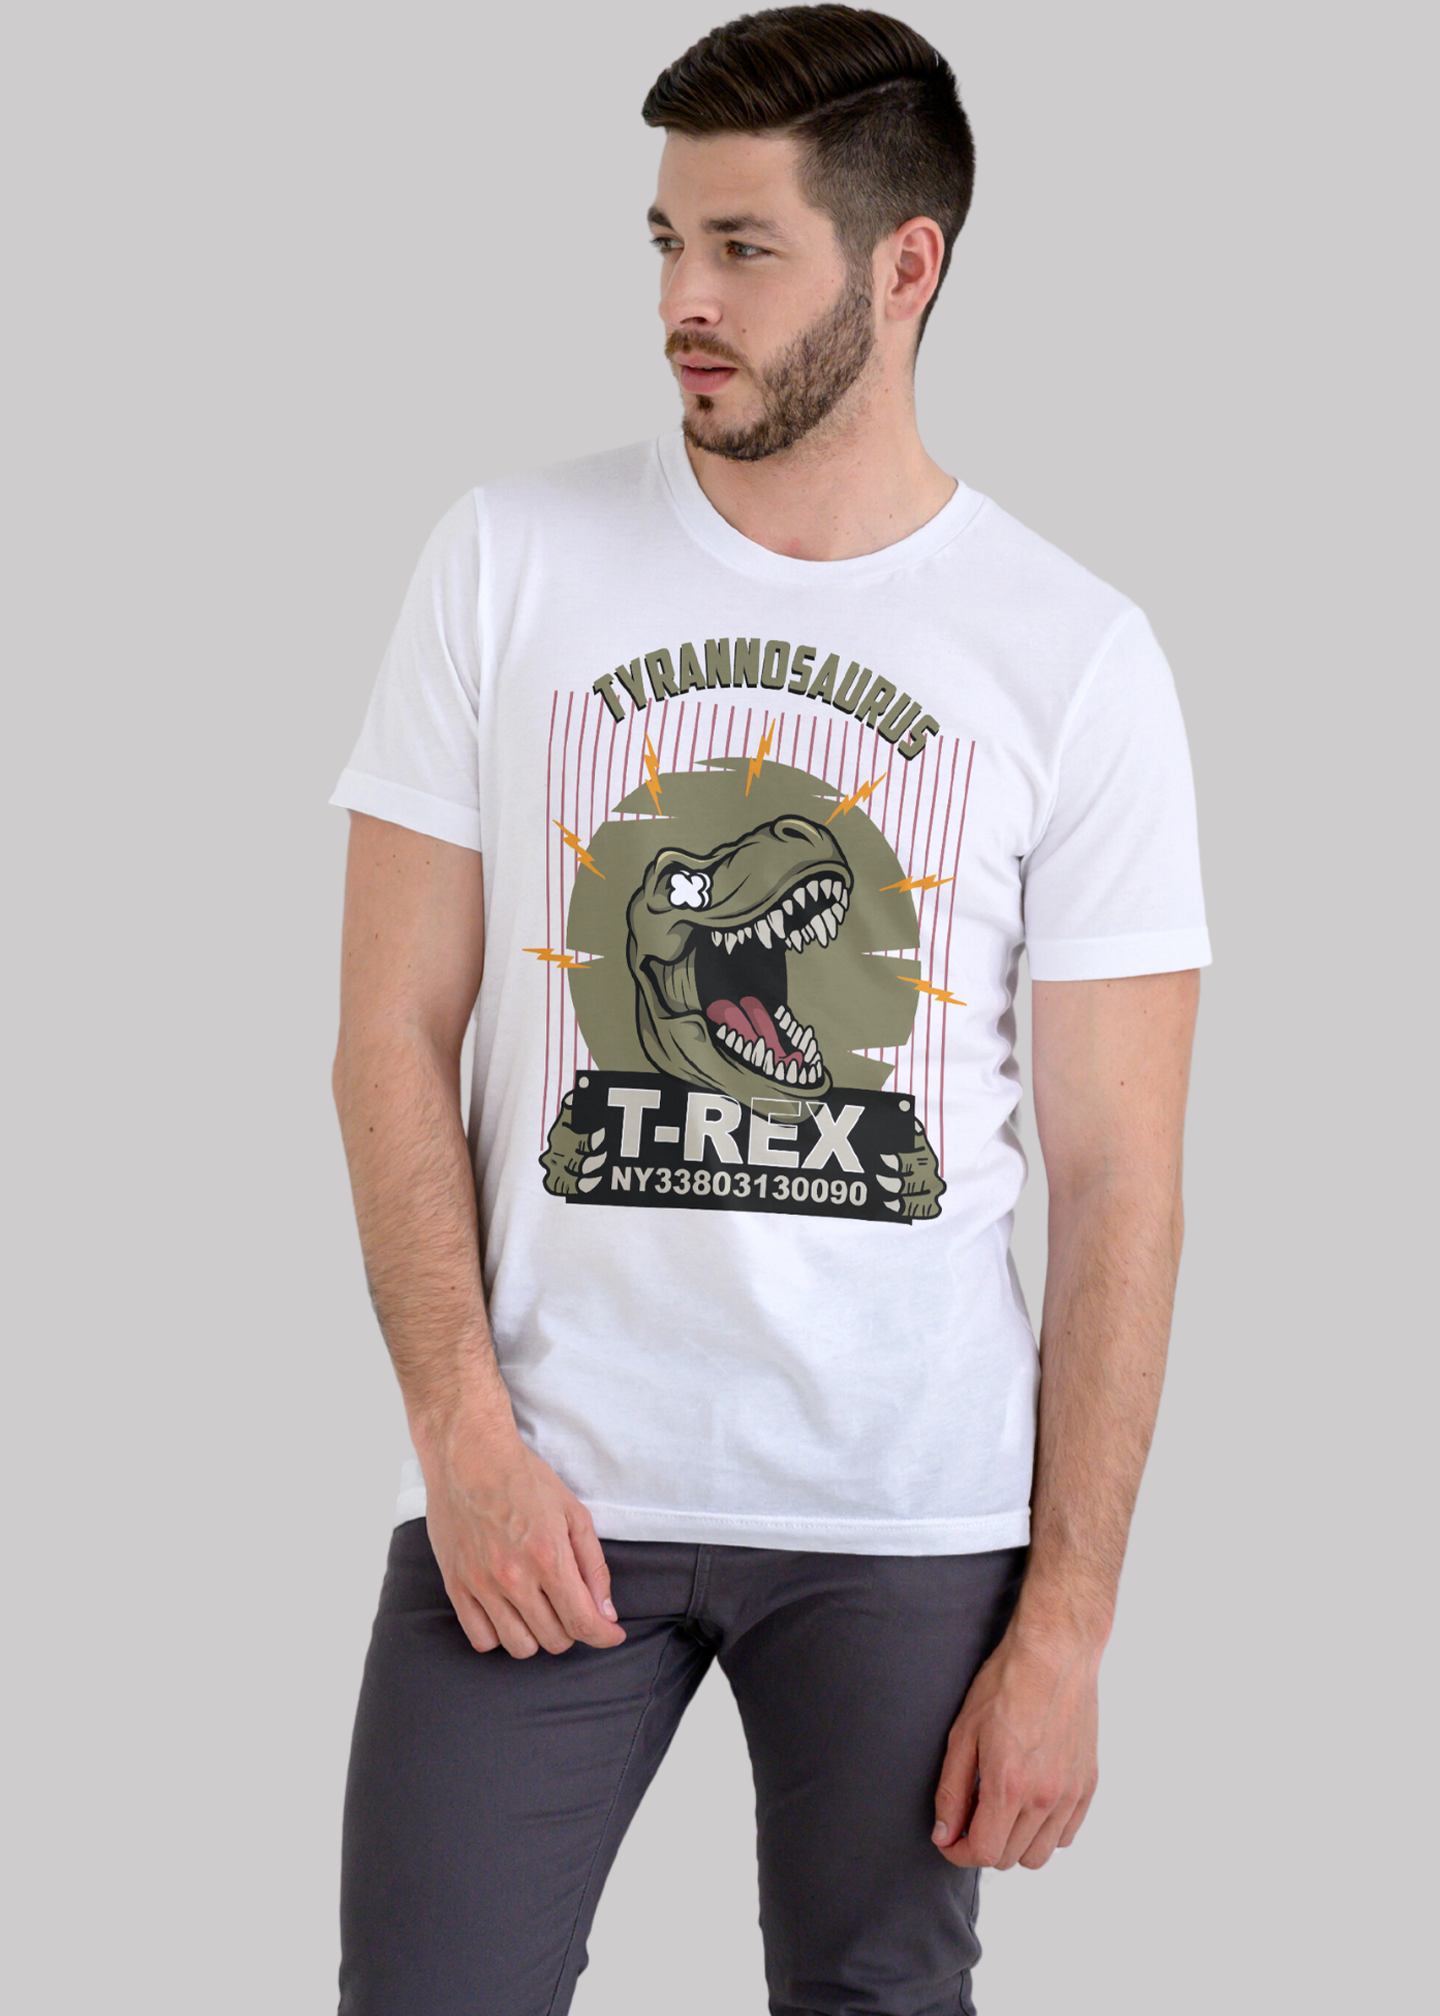 T rex Printed Half Sleeve Premium Cotton T-shirt For Men